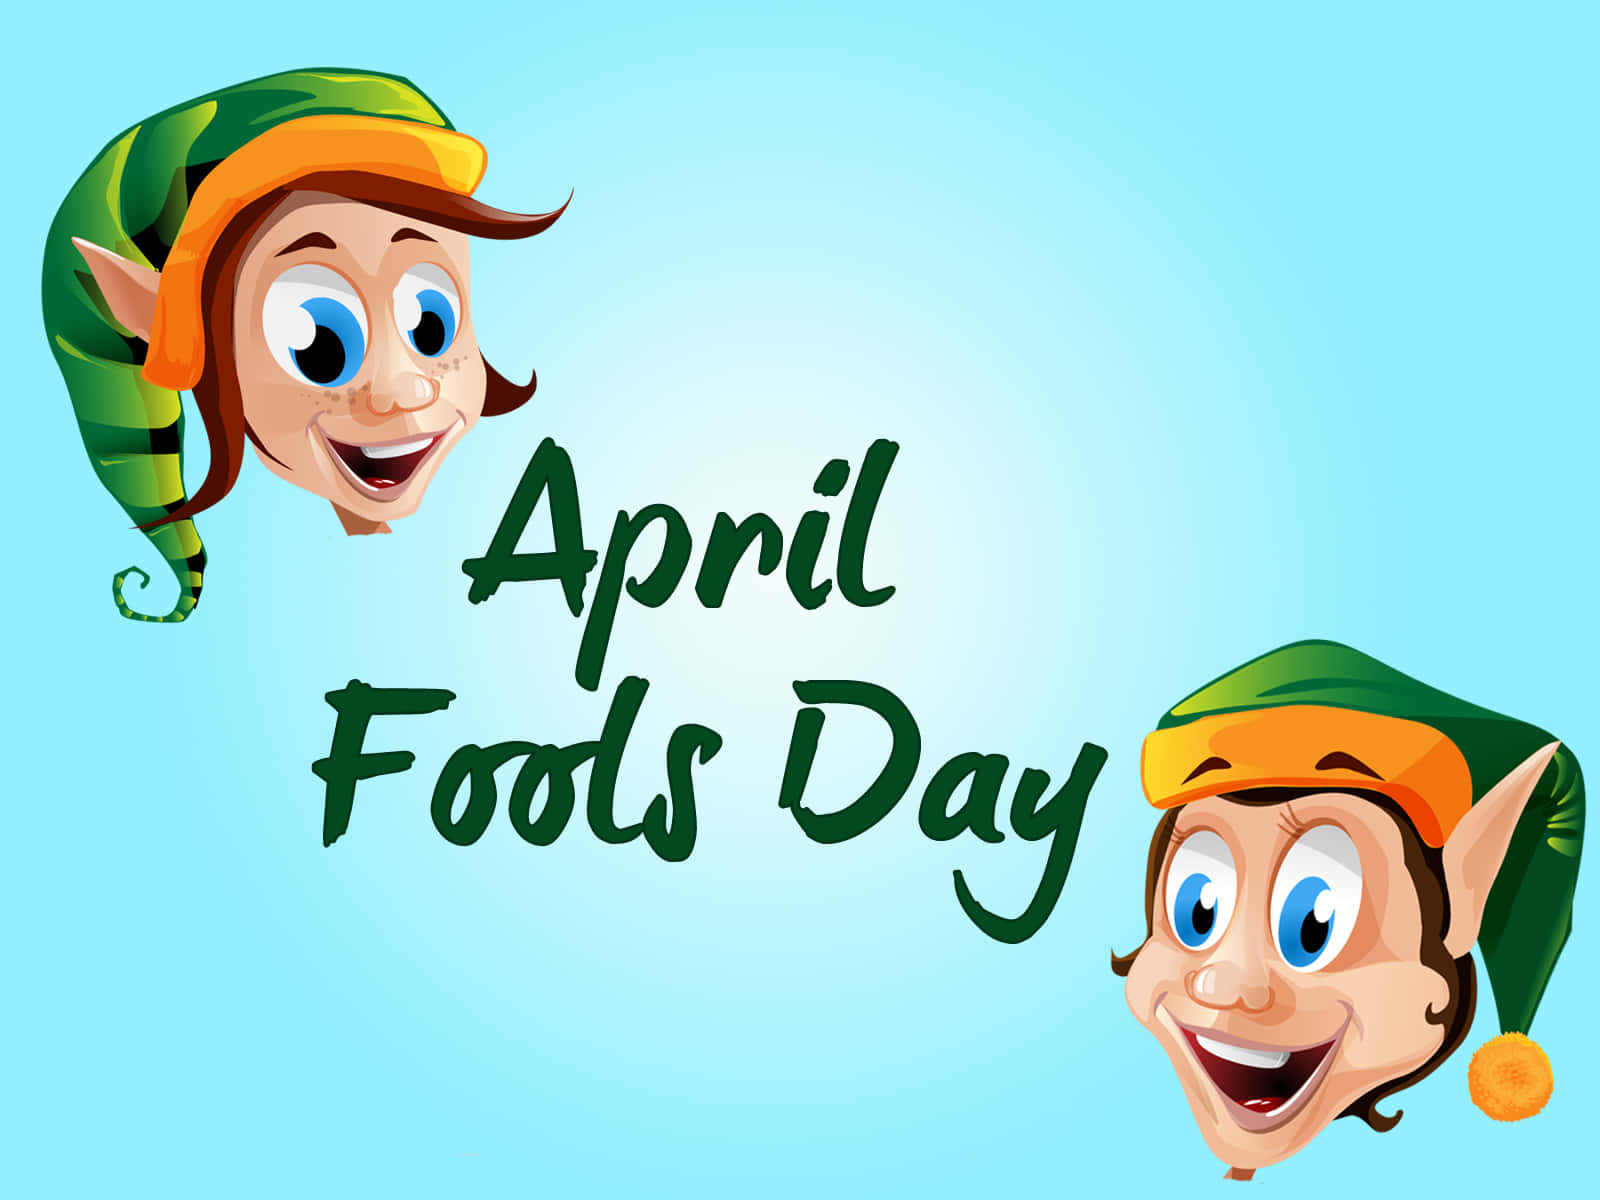 Make sure to stay vigilant this April Fools!